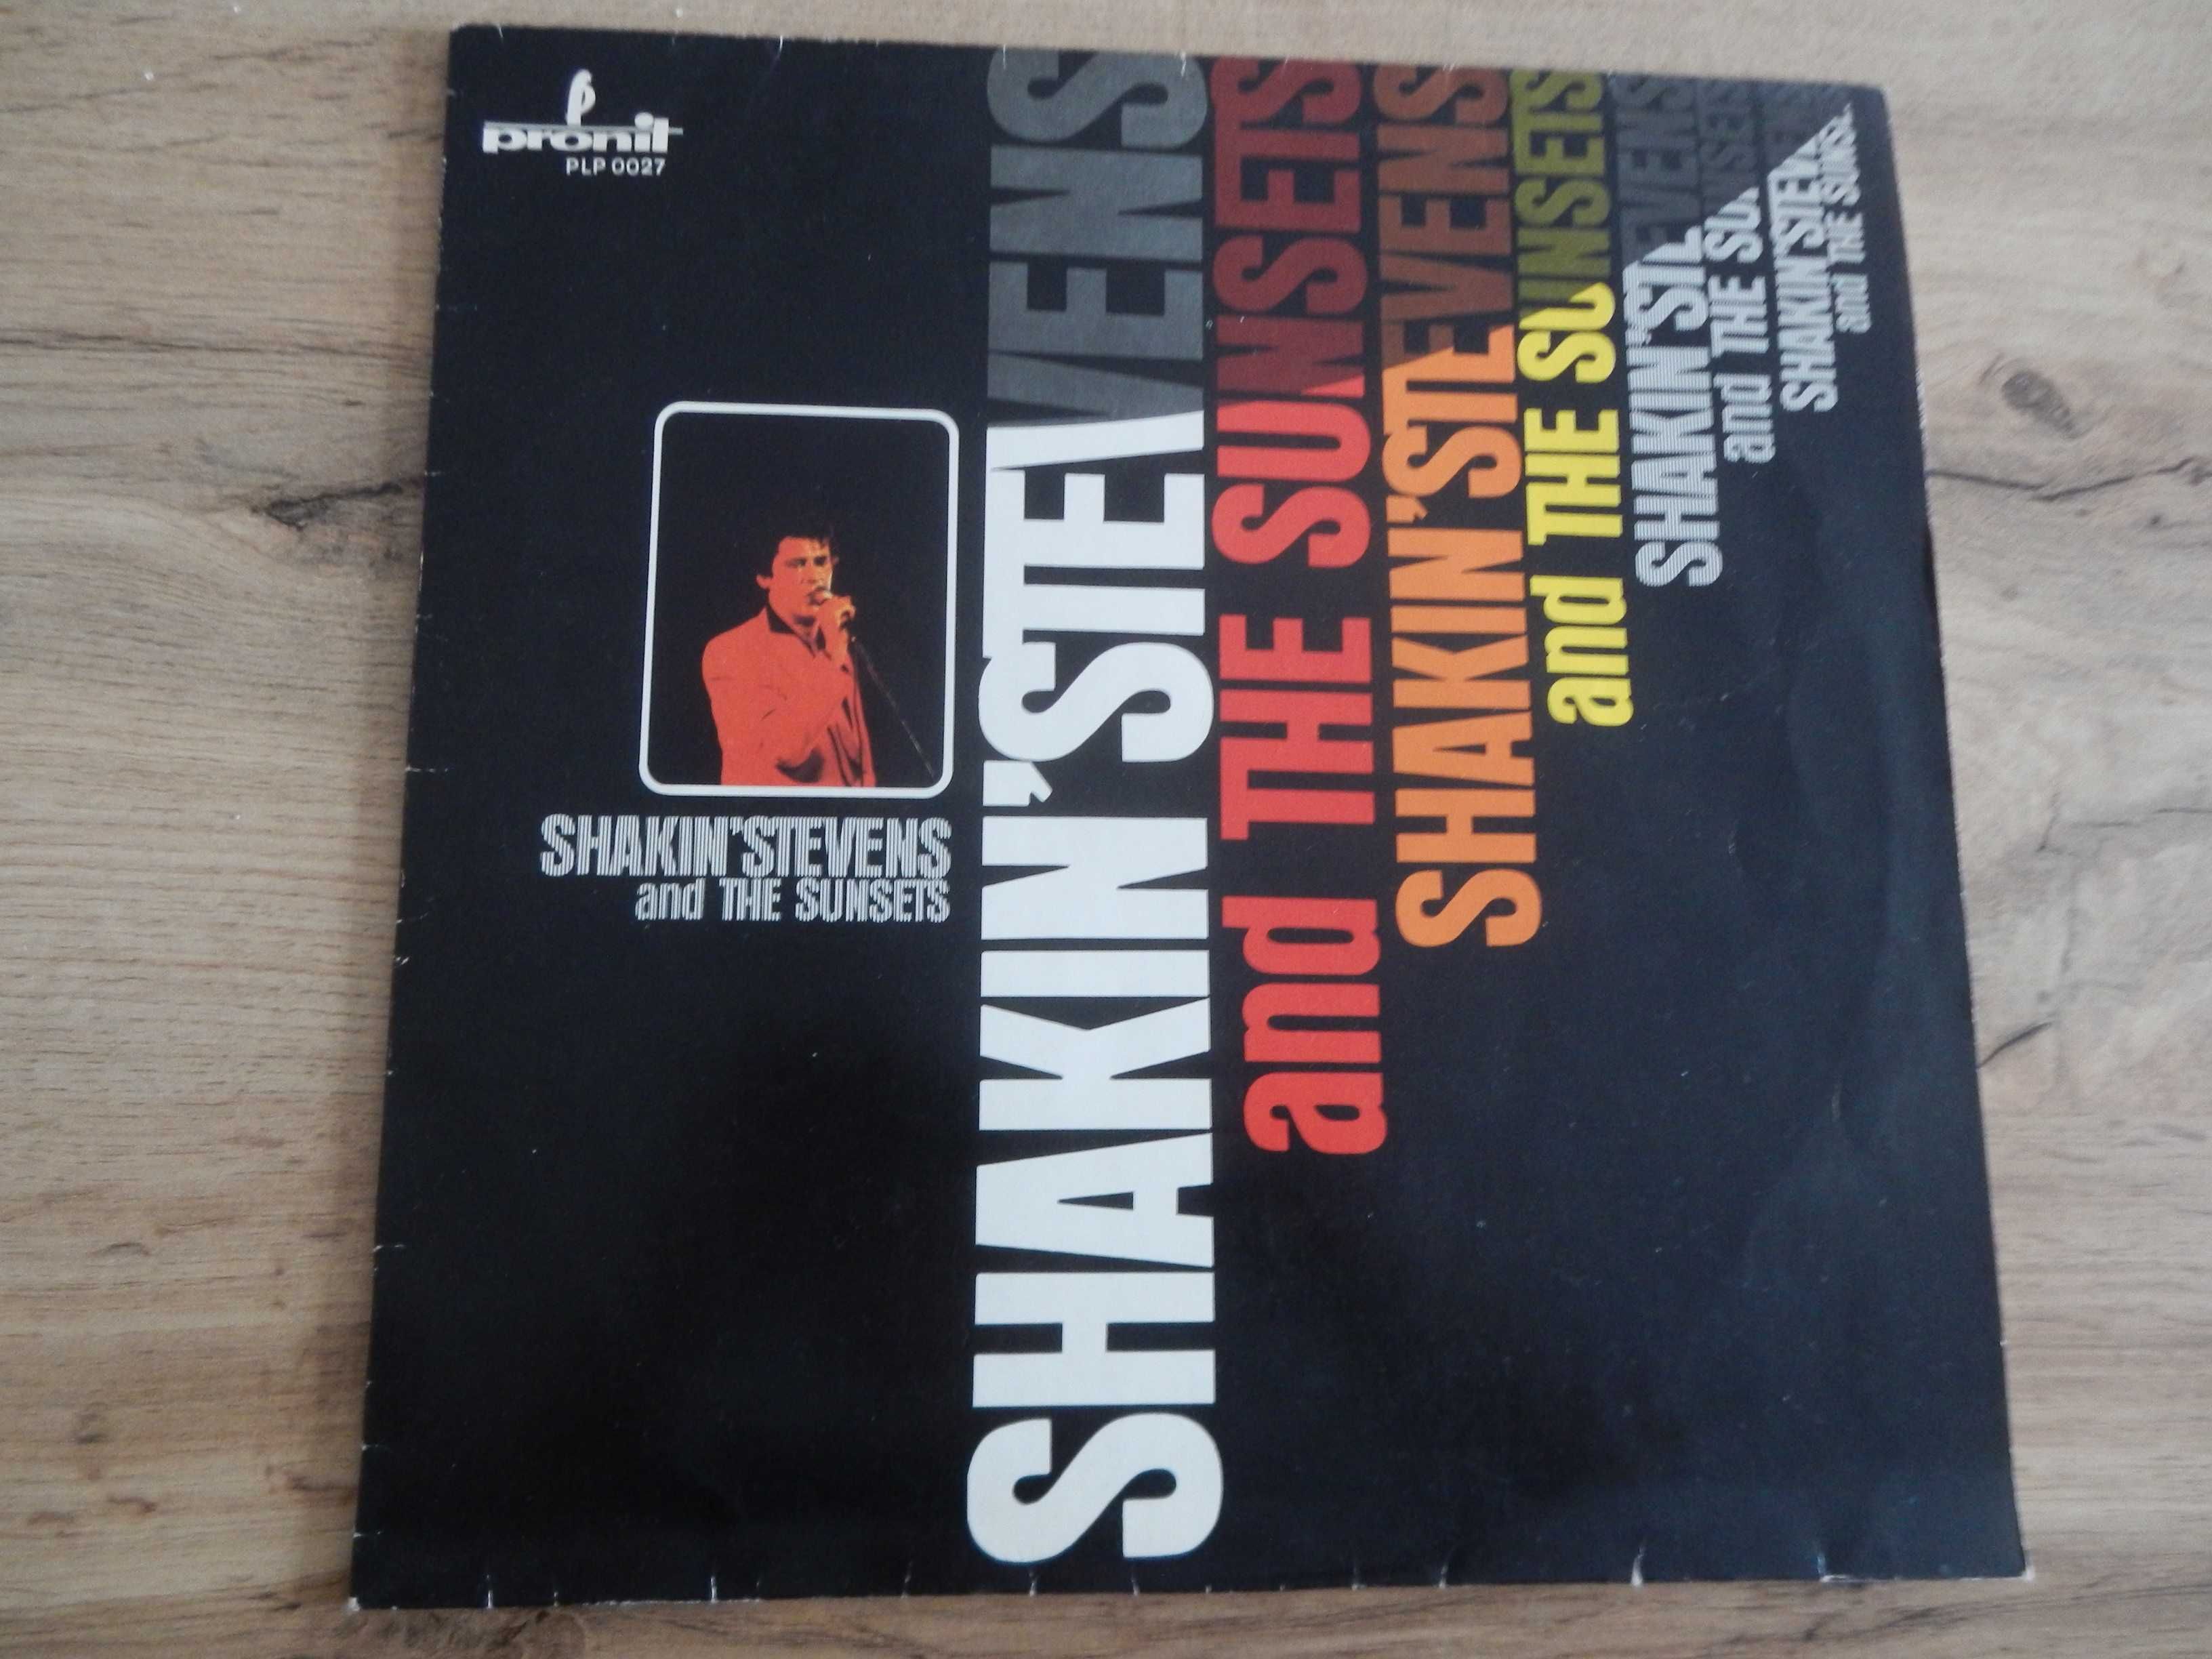 Płyta winylowa Shakin Stevens and The Sunsets